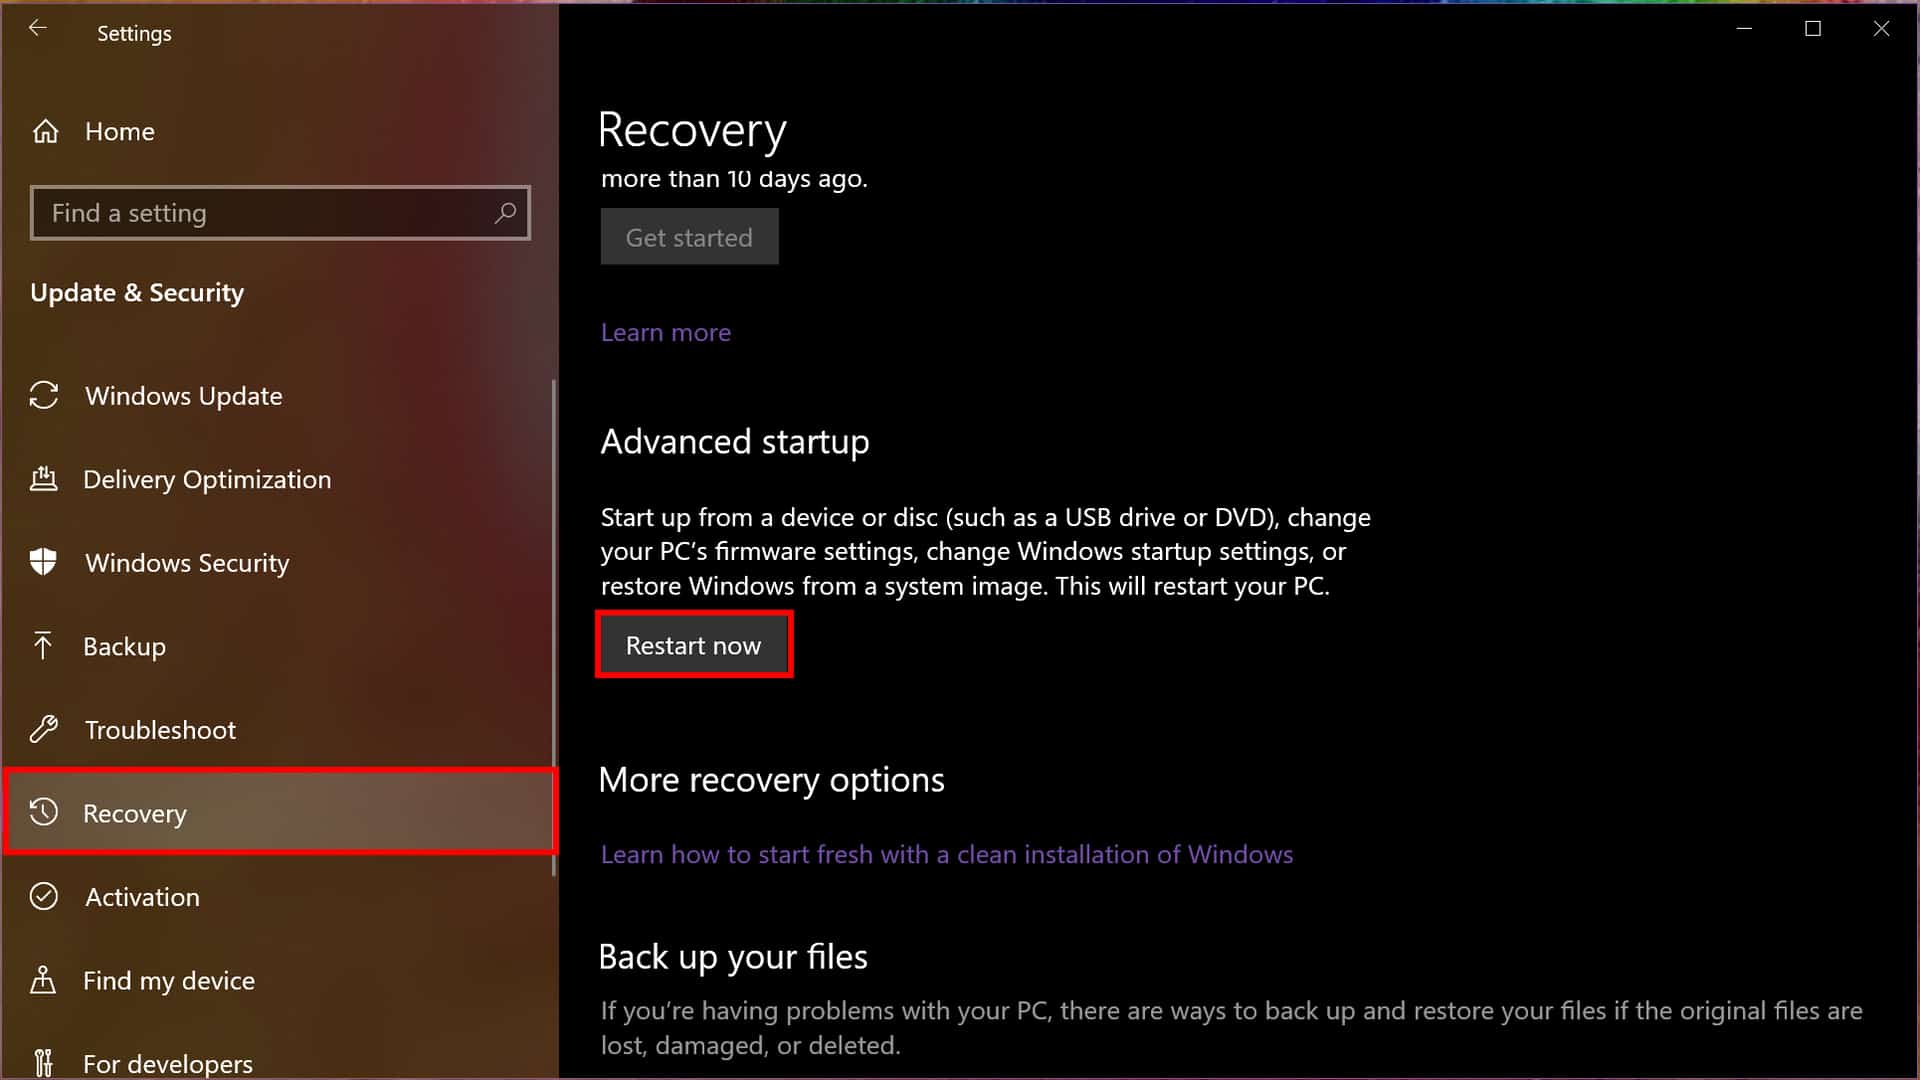 Windows 10 Recovery restart now